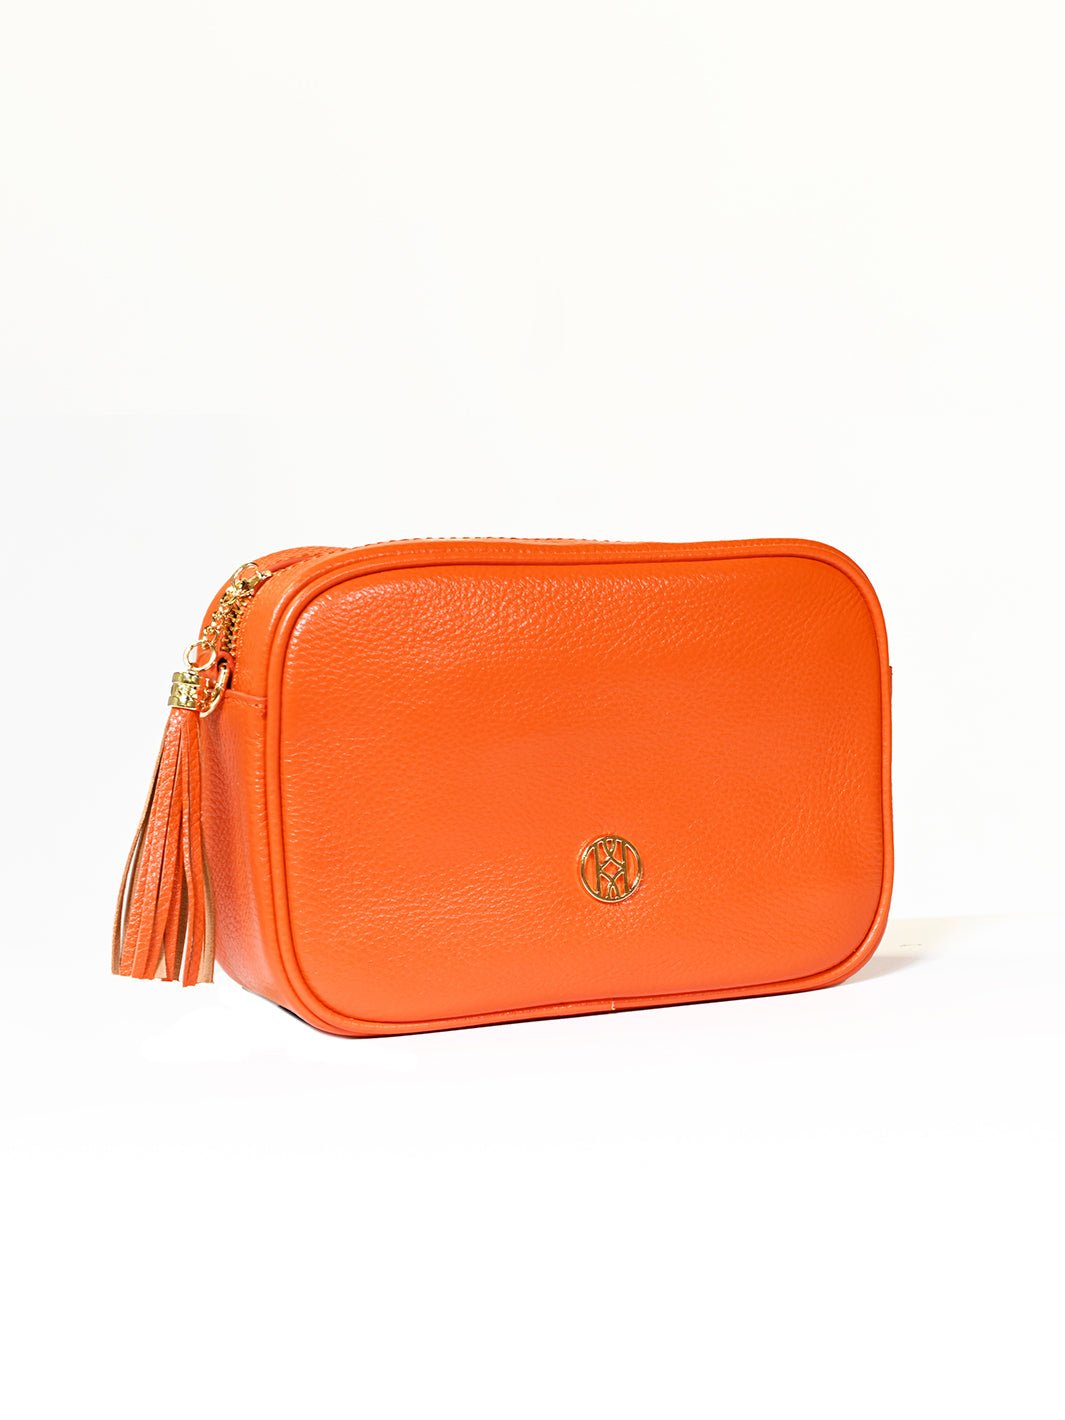 Leather Side Bag Mandarin ACCESSORY - HANDBAG jeanpierreklifa.com   